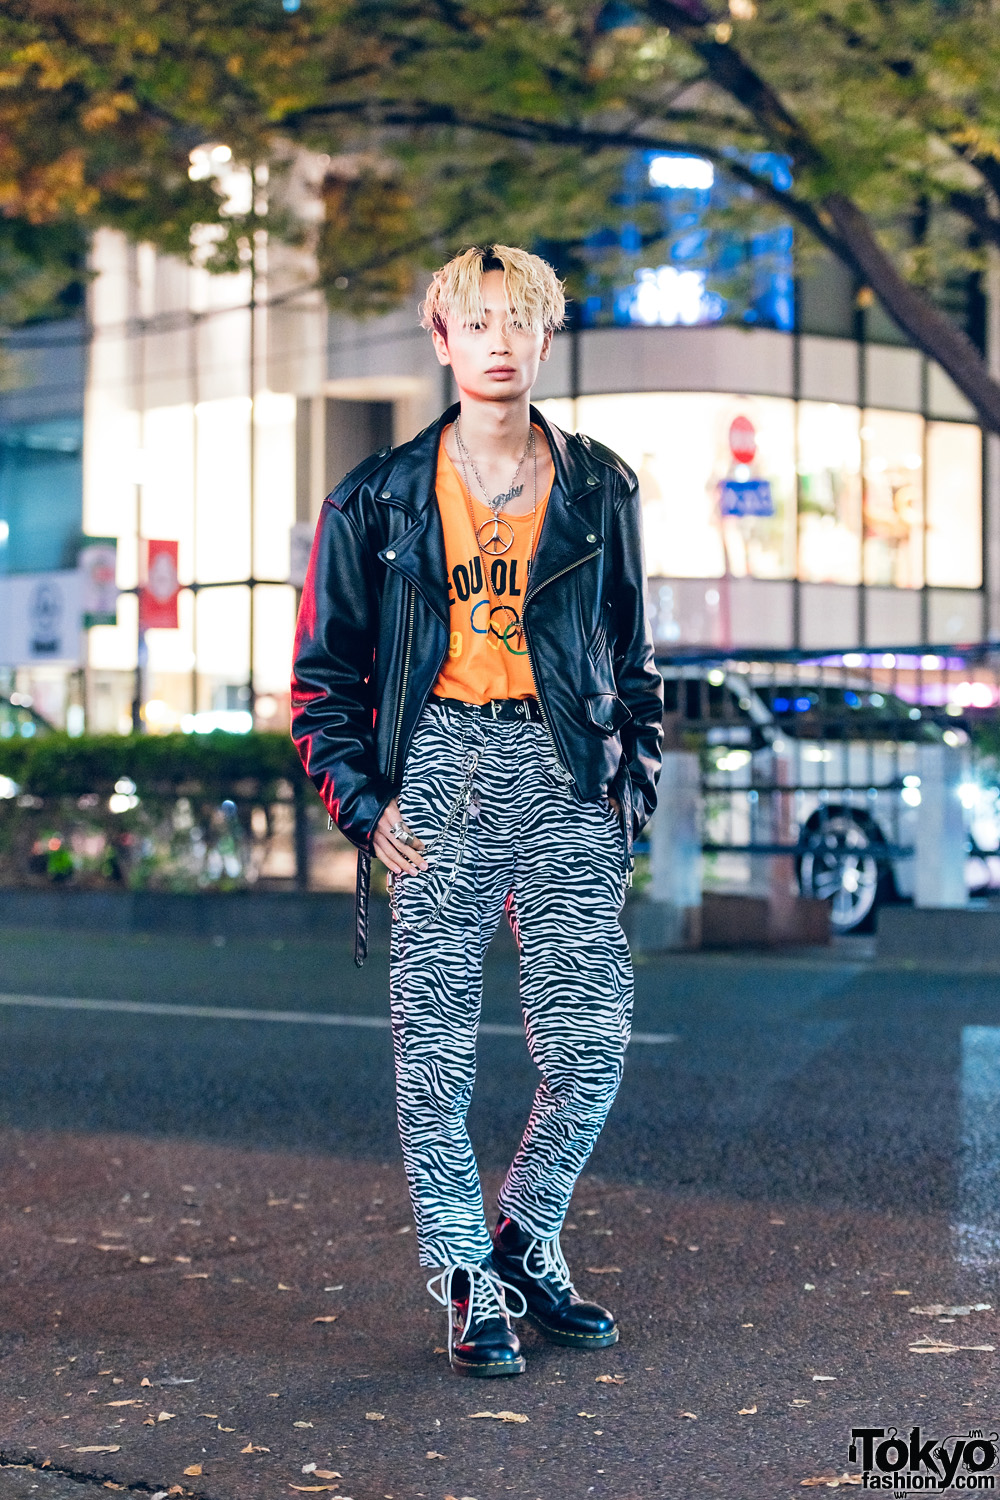 Tokyo Street Style w/ Motorcycle Jacket, Seoul Olympics Top, Zebra Print Pants & Leather Boots